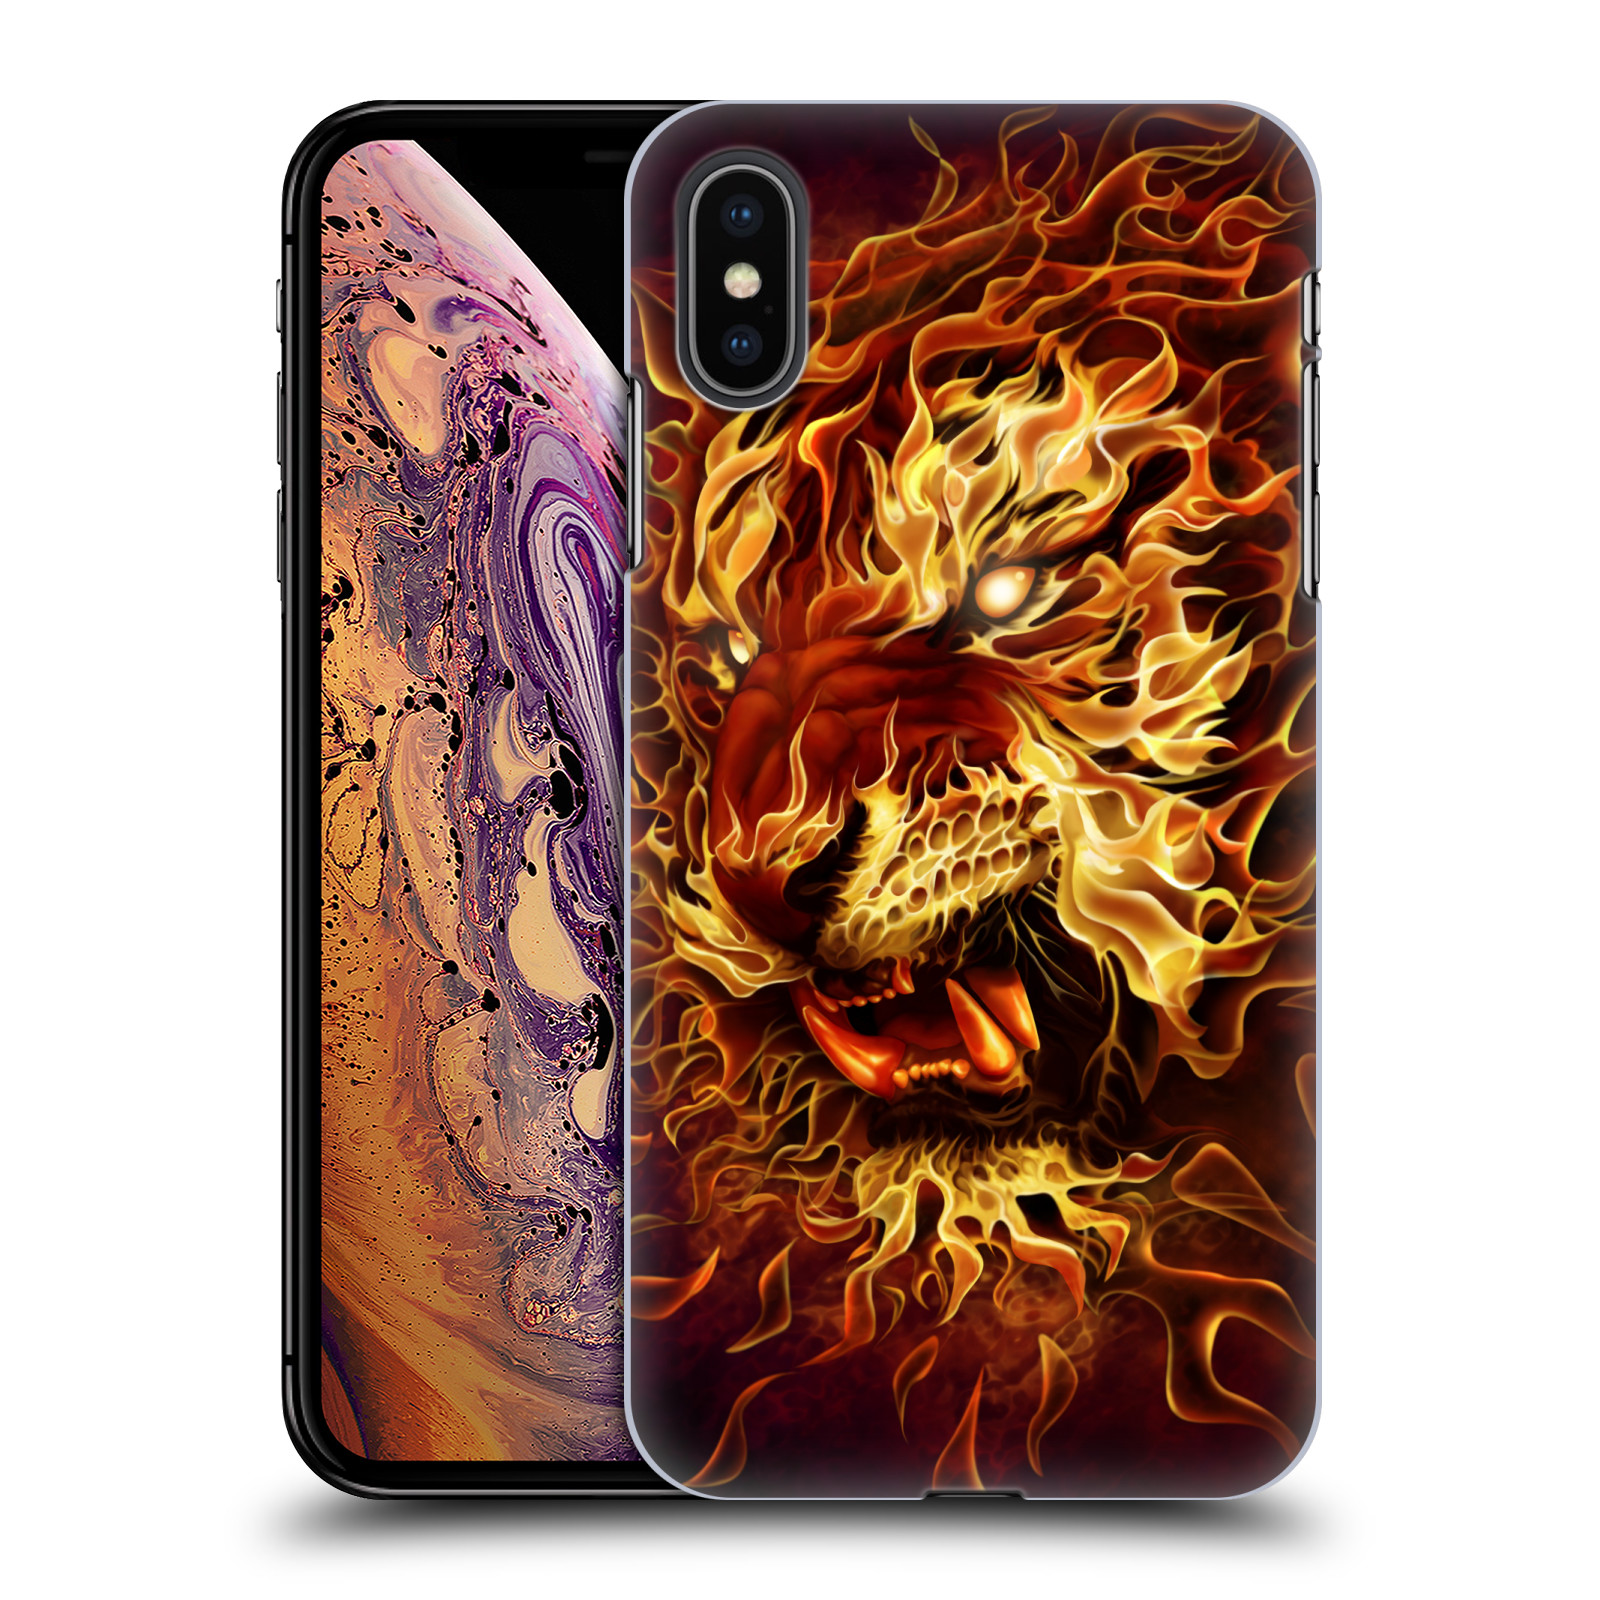 Pouzdro na mobil Apple Iphone XS MAX - HEAD CASE - Fantasy kresby Tom Wood - Ohnivý tygr